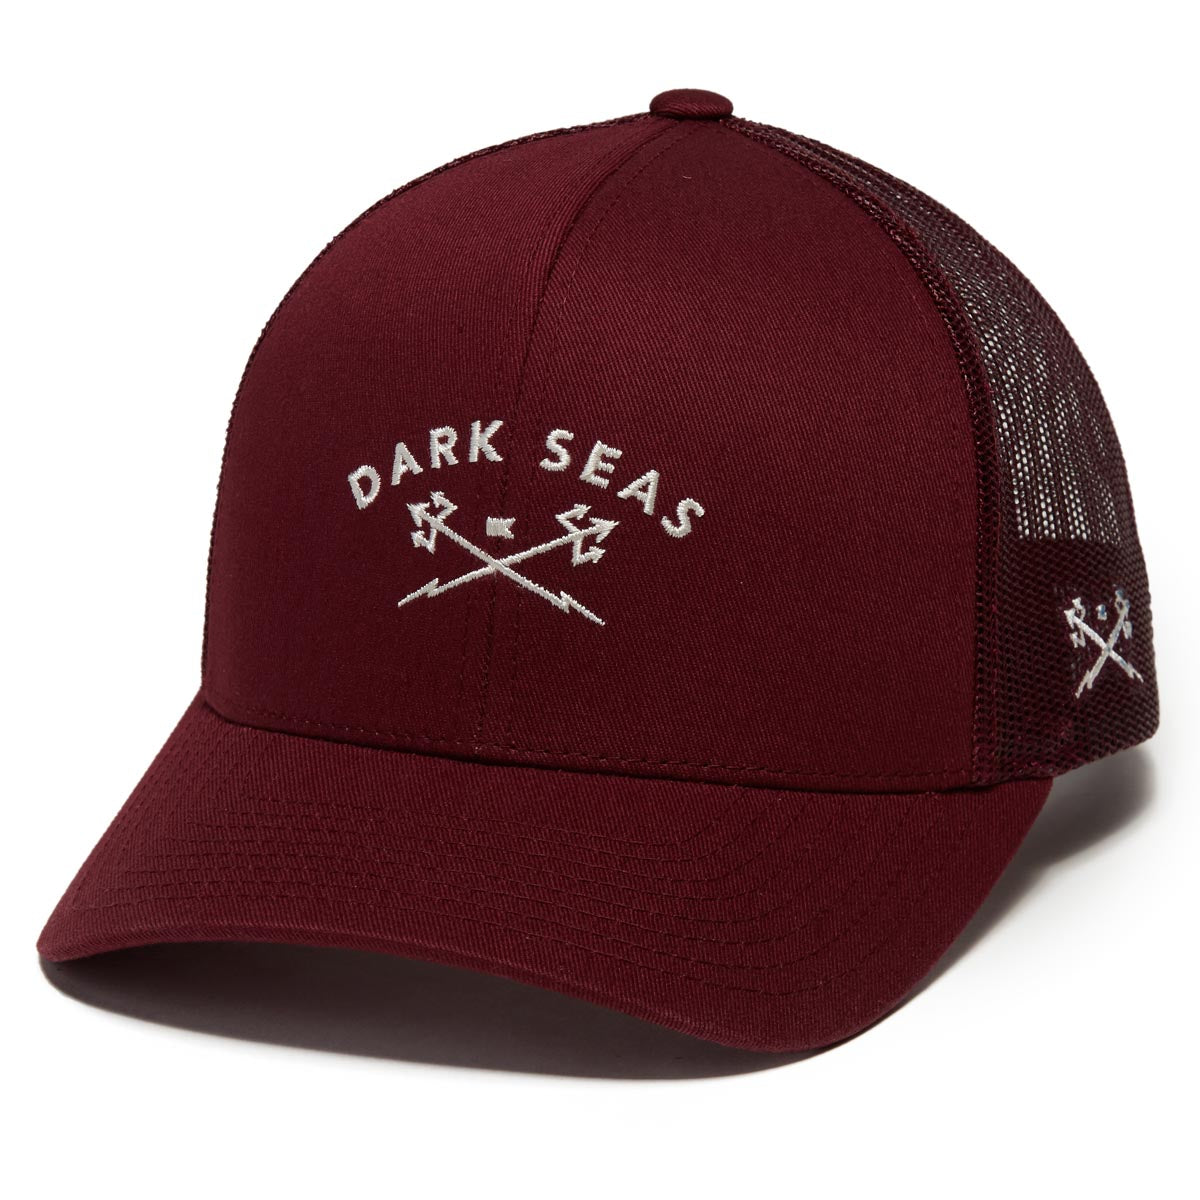 Dark Seas Murre Hat - Burgundy image 1